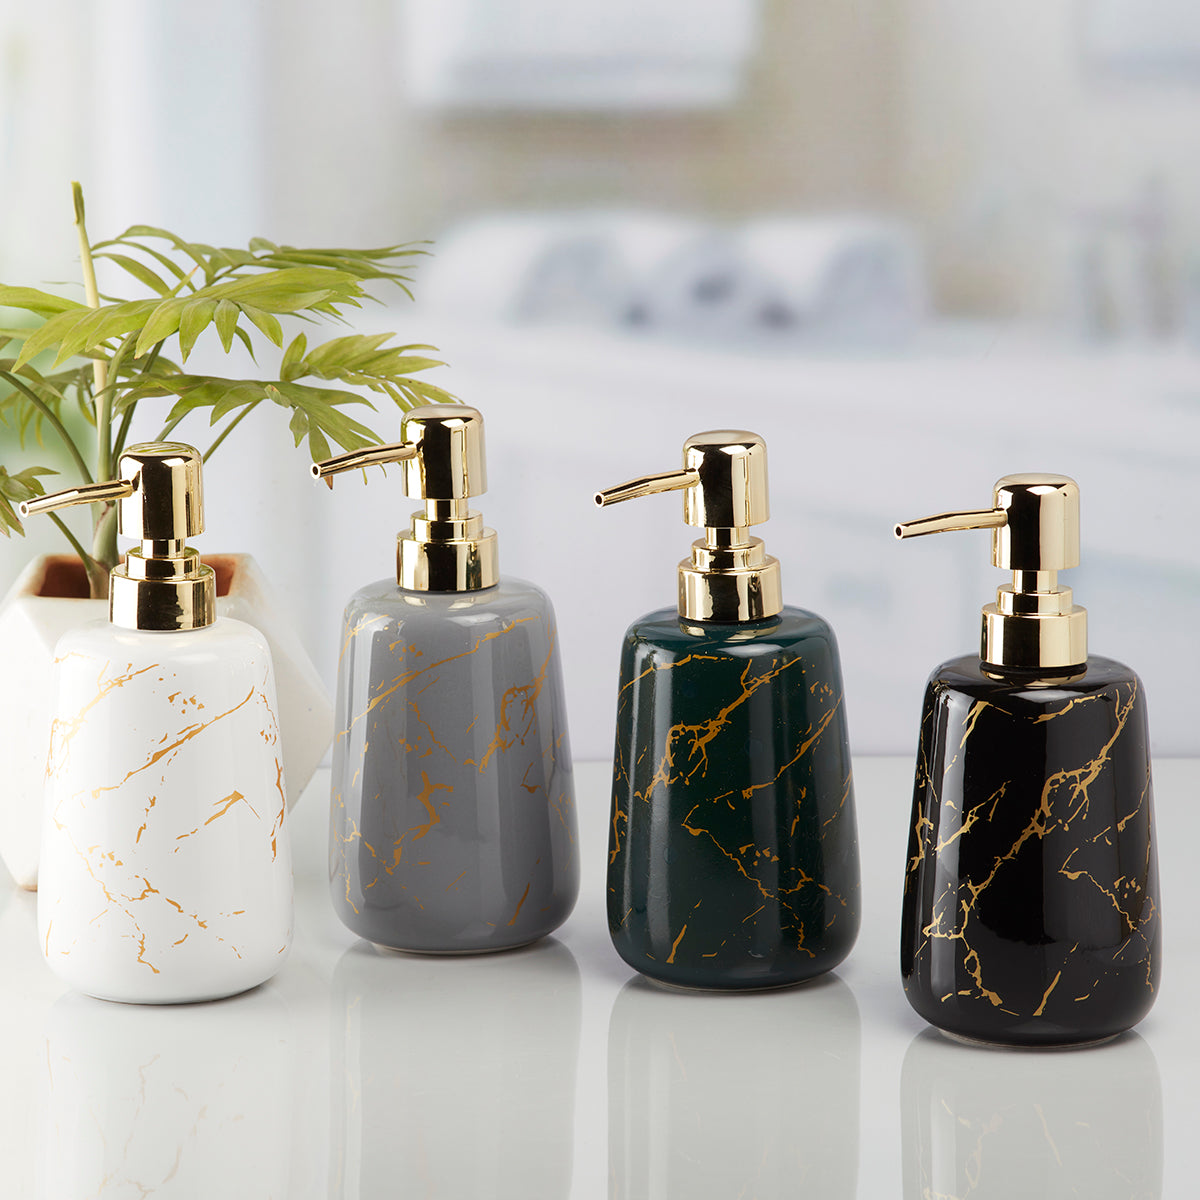 Ceramic Soap Dispenser handwash Pump for Bathroom, Set of 1, Green/Gold (10200)